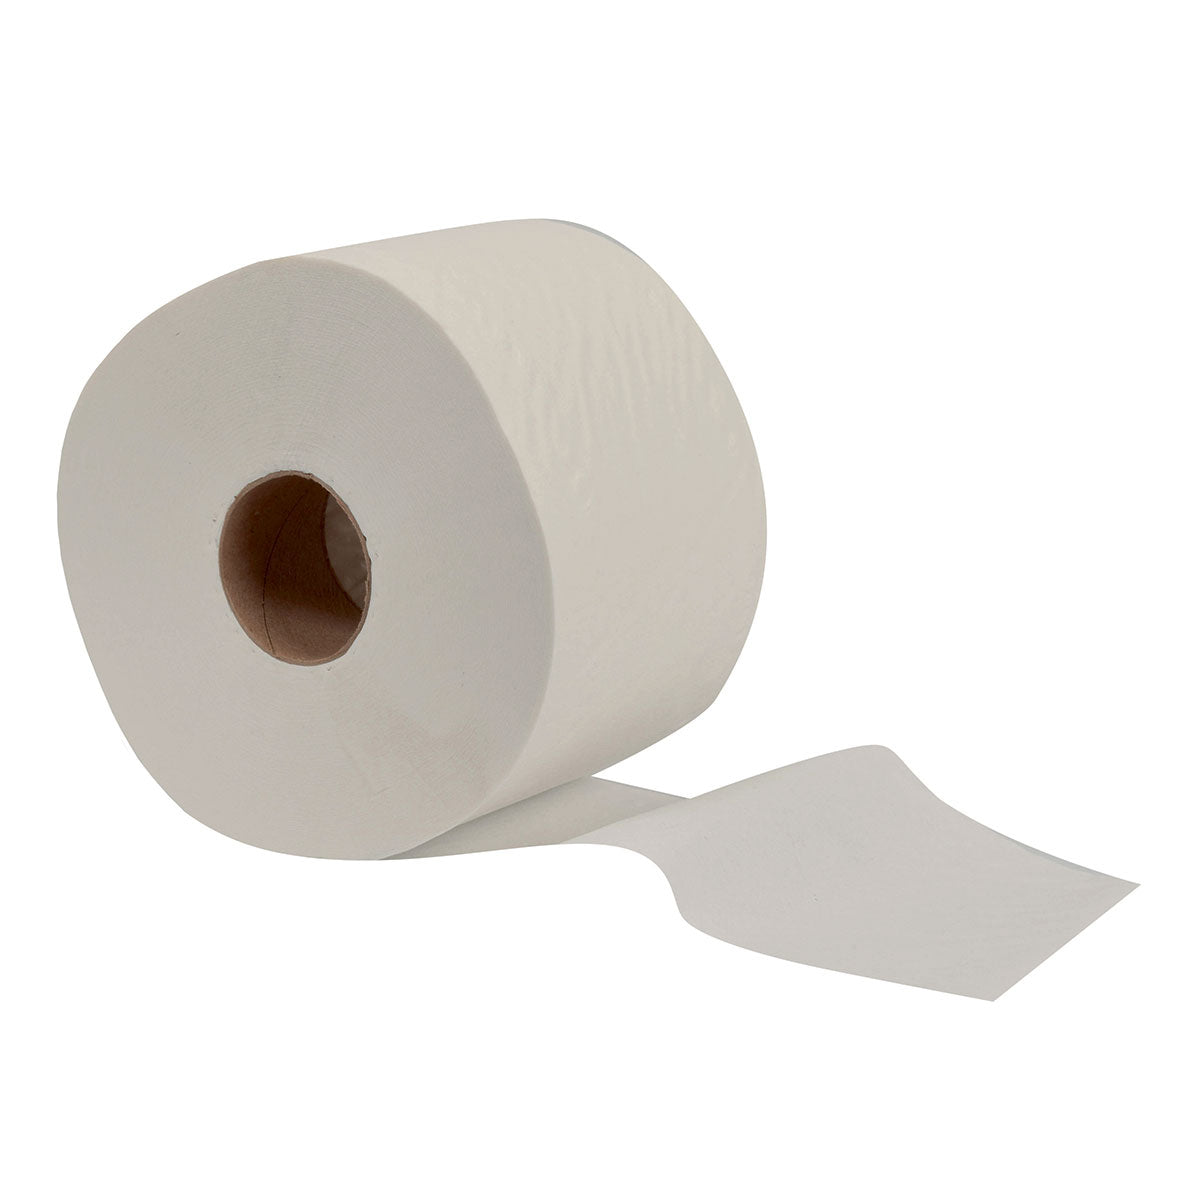 Toilet paper TORK T6, 100m, 2 lyers, 127530